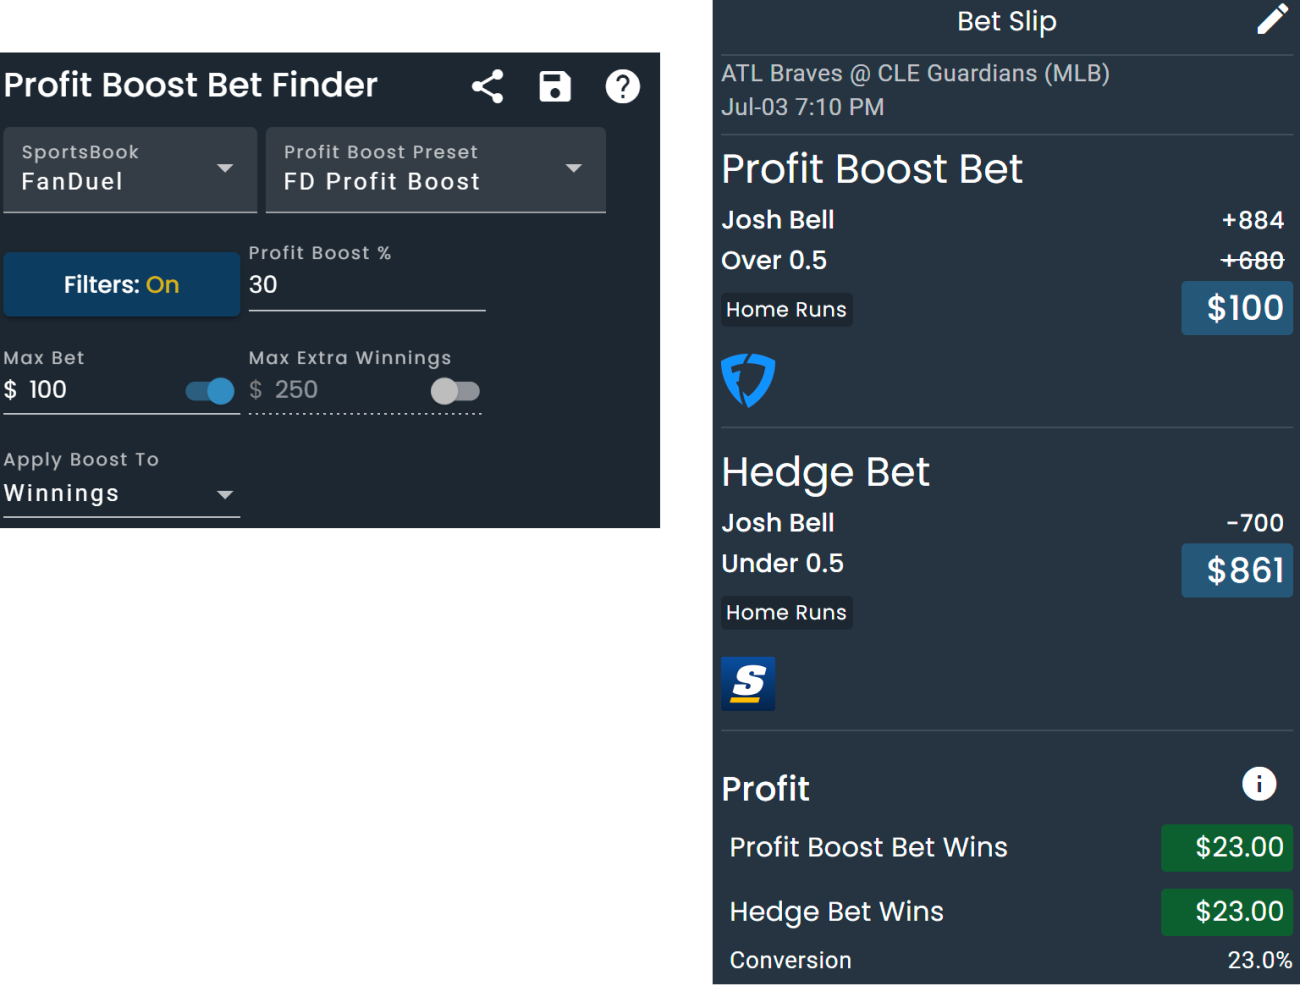 Screenshot of the Profit Boost Bet Finder on DarkHorse Odds a FanDuel Profit Boost.